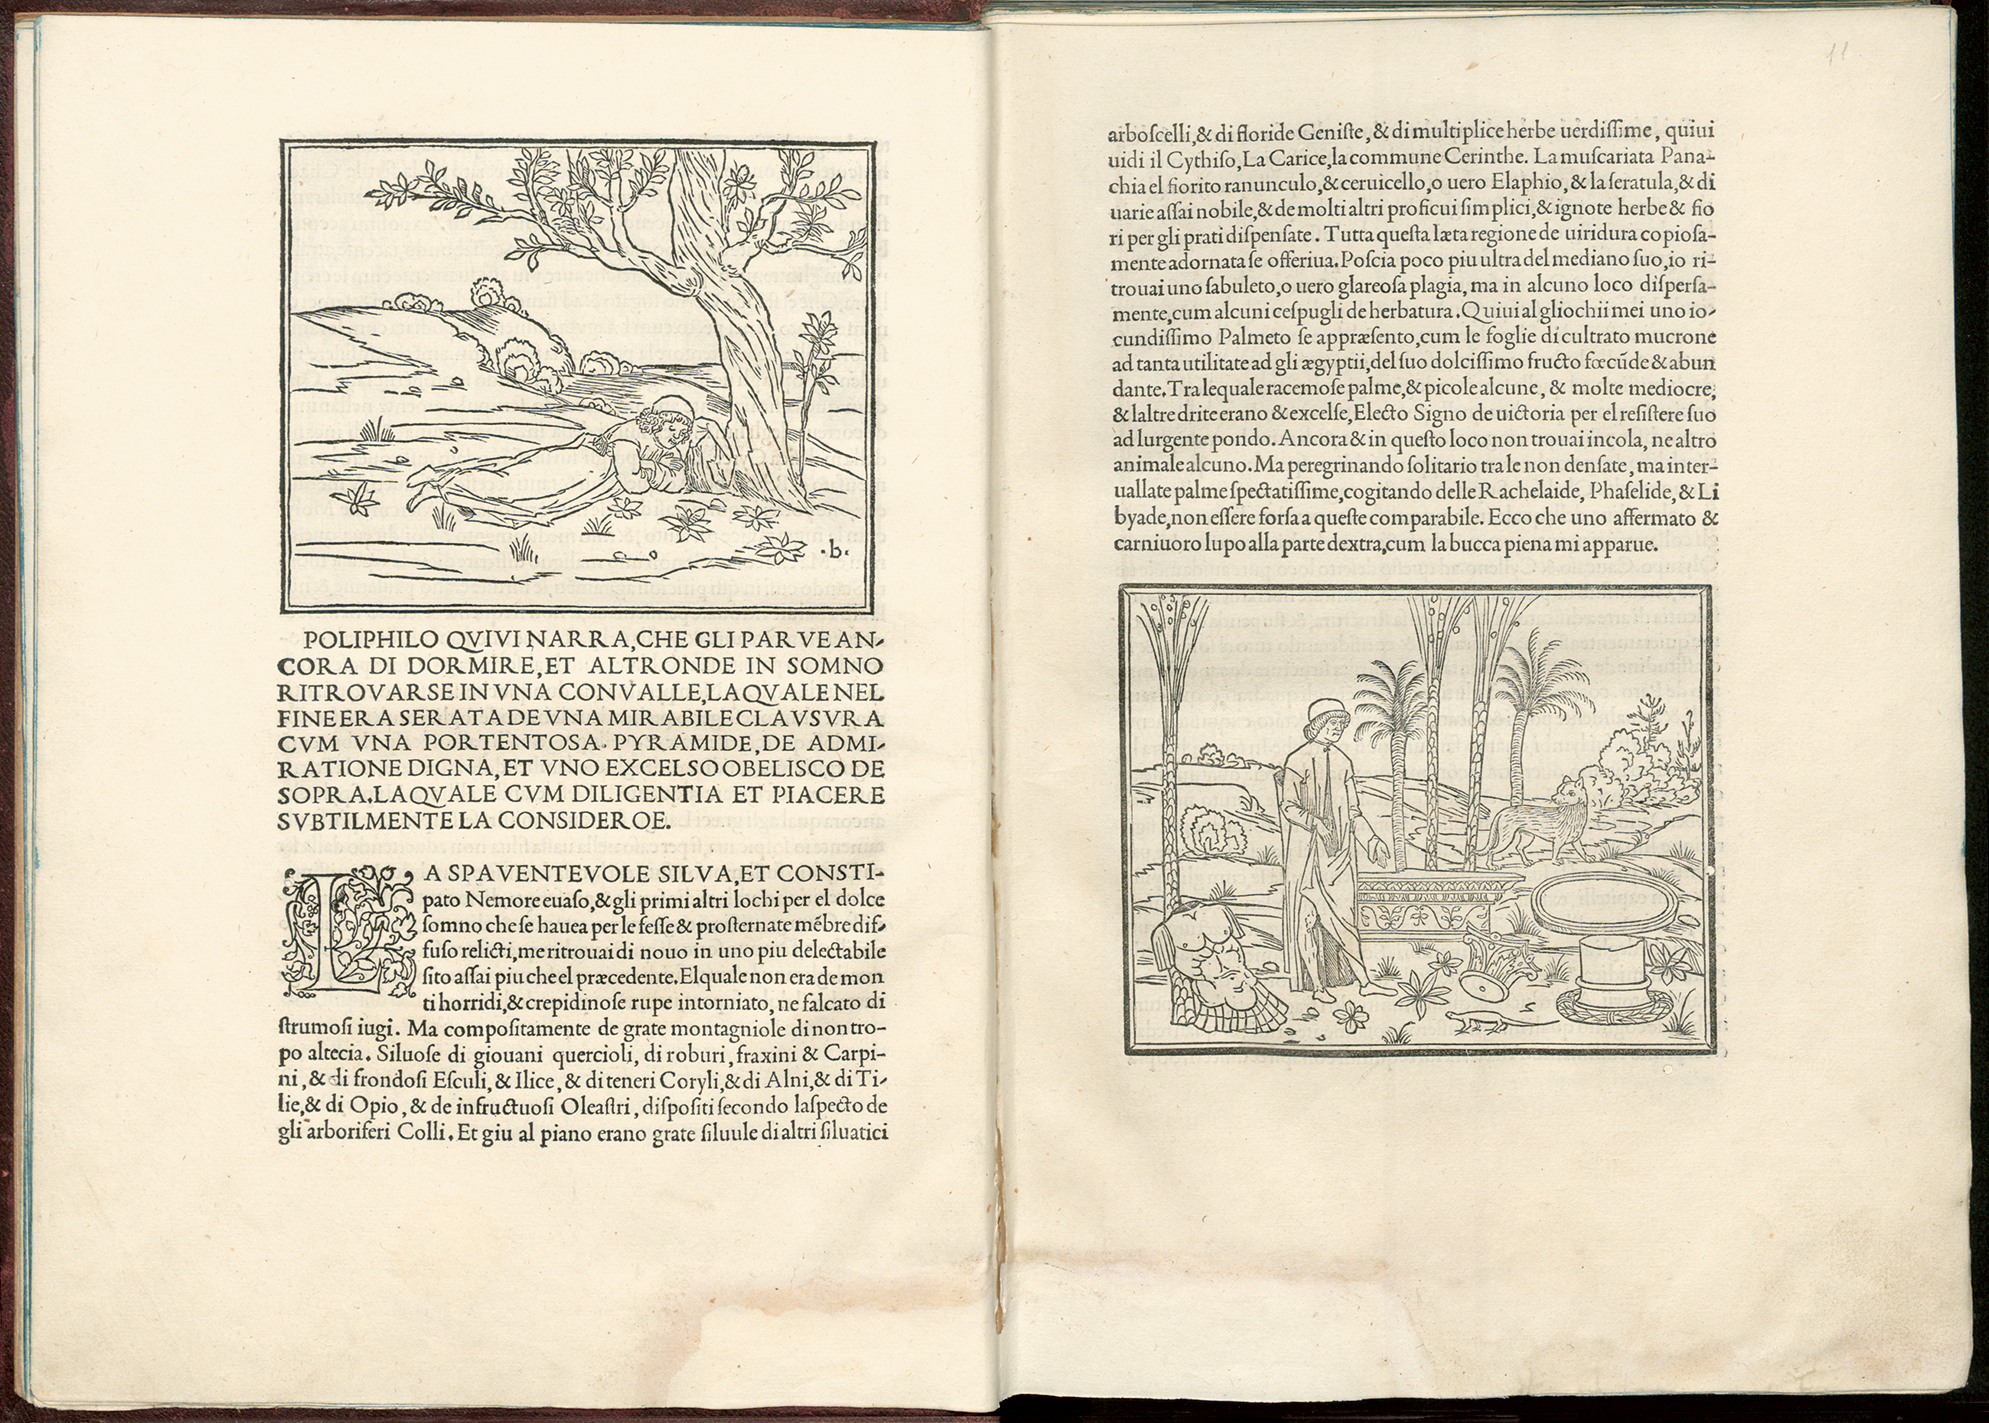 Hypnerotomachia Poliphili, Aldo Manuzio, Venezia 1499